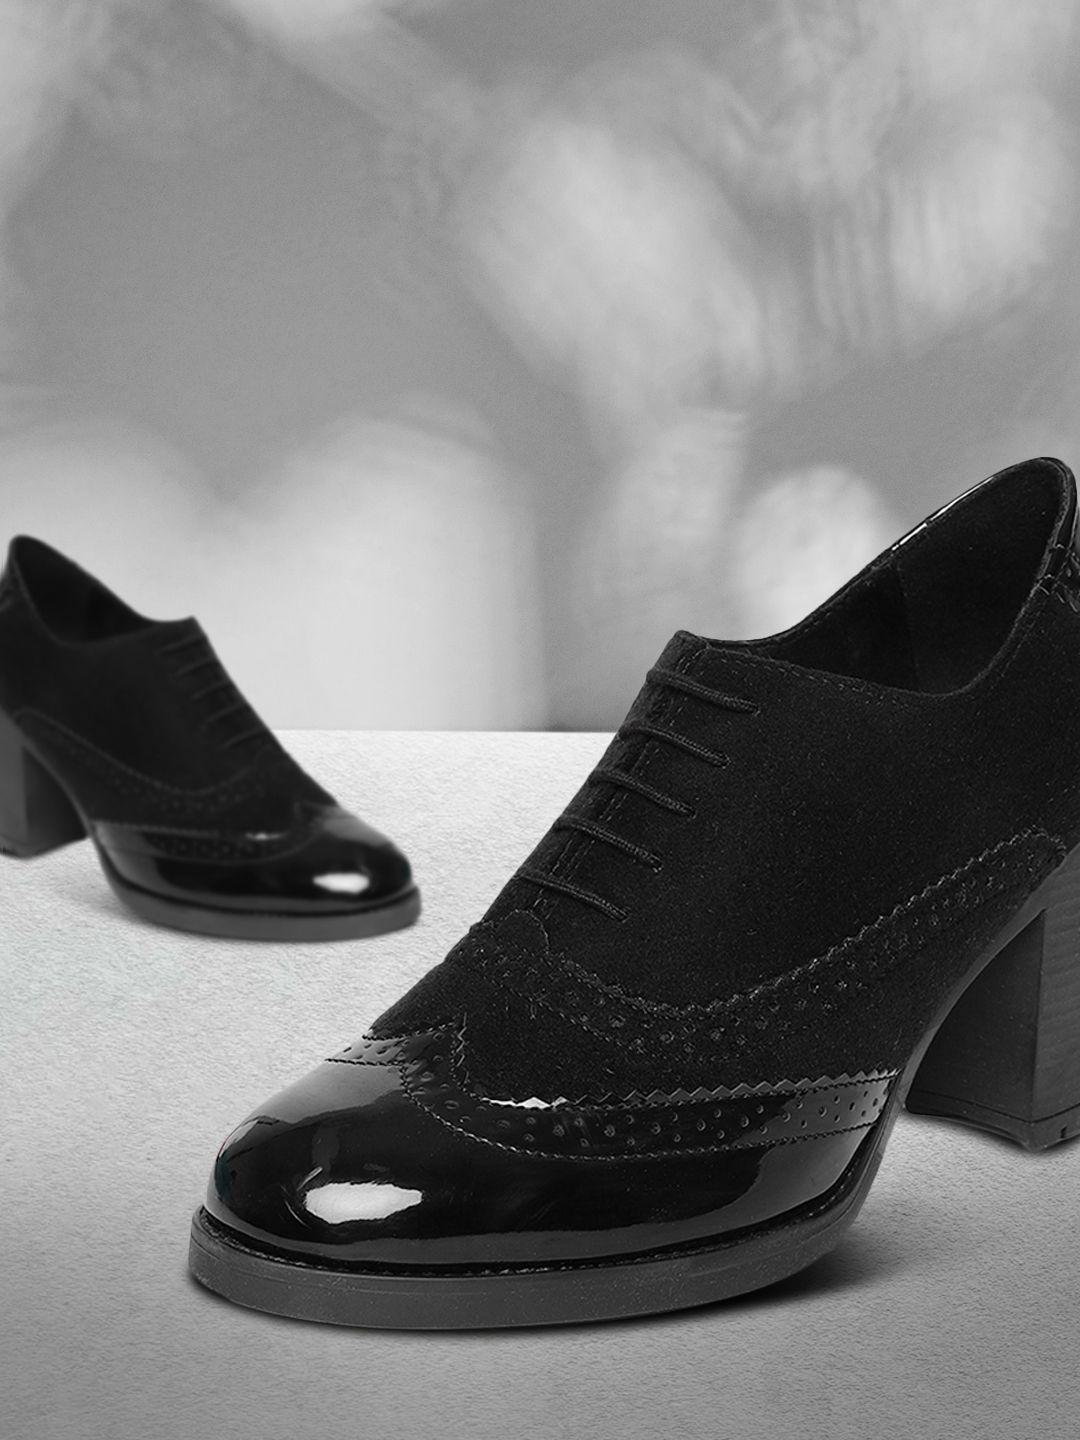 catwalk women black solid heeled boots